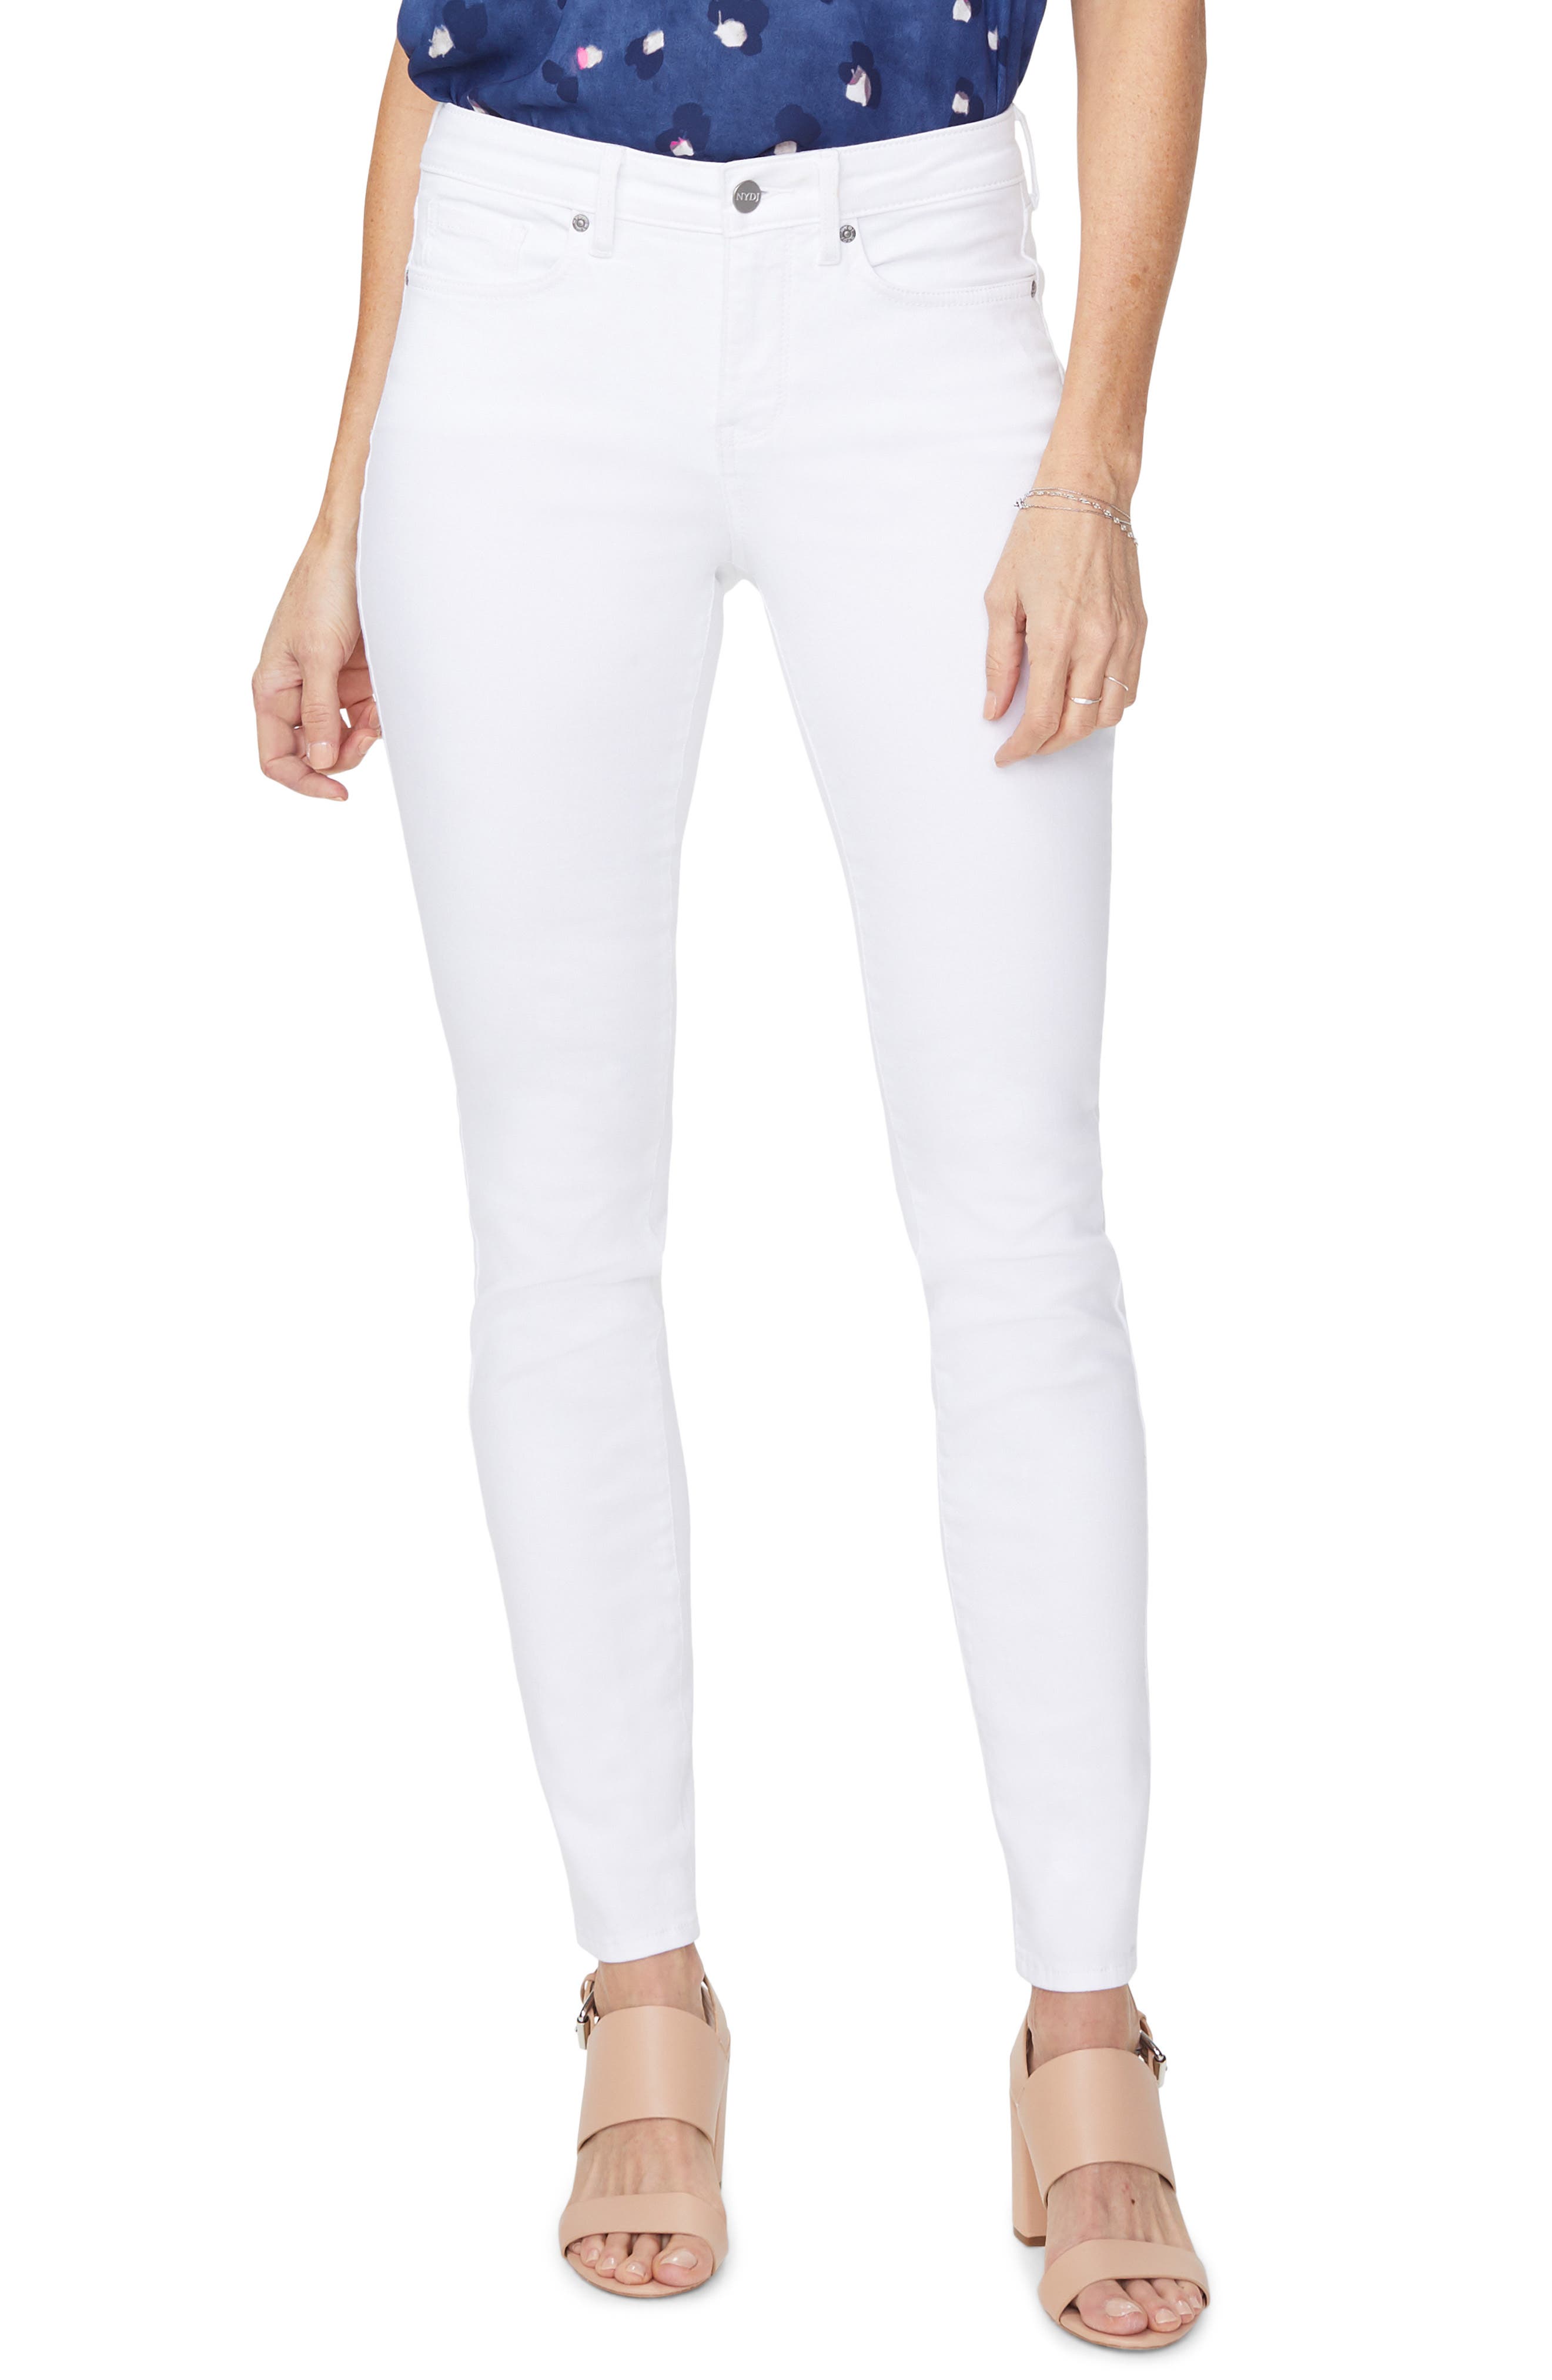 white stretch skinny jeans